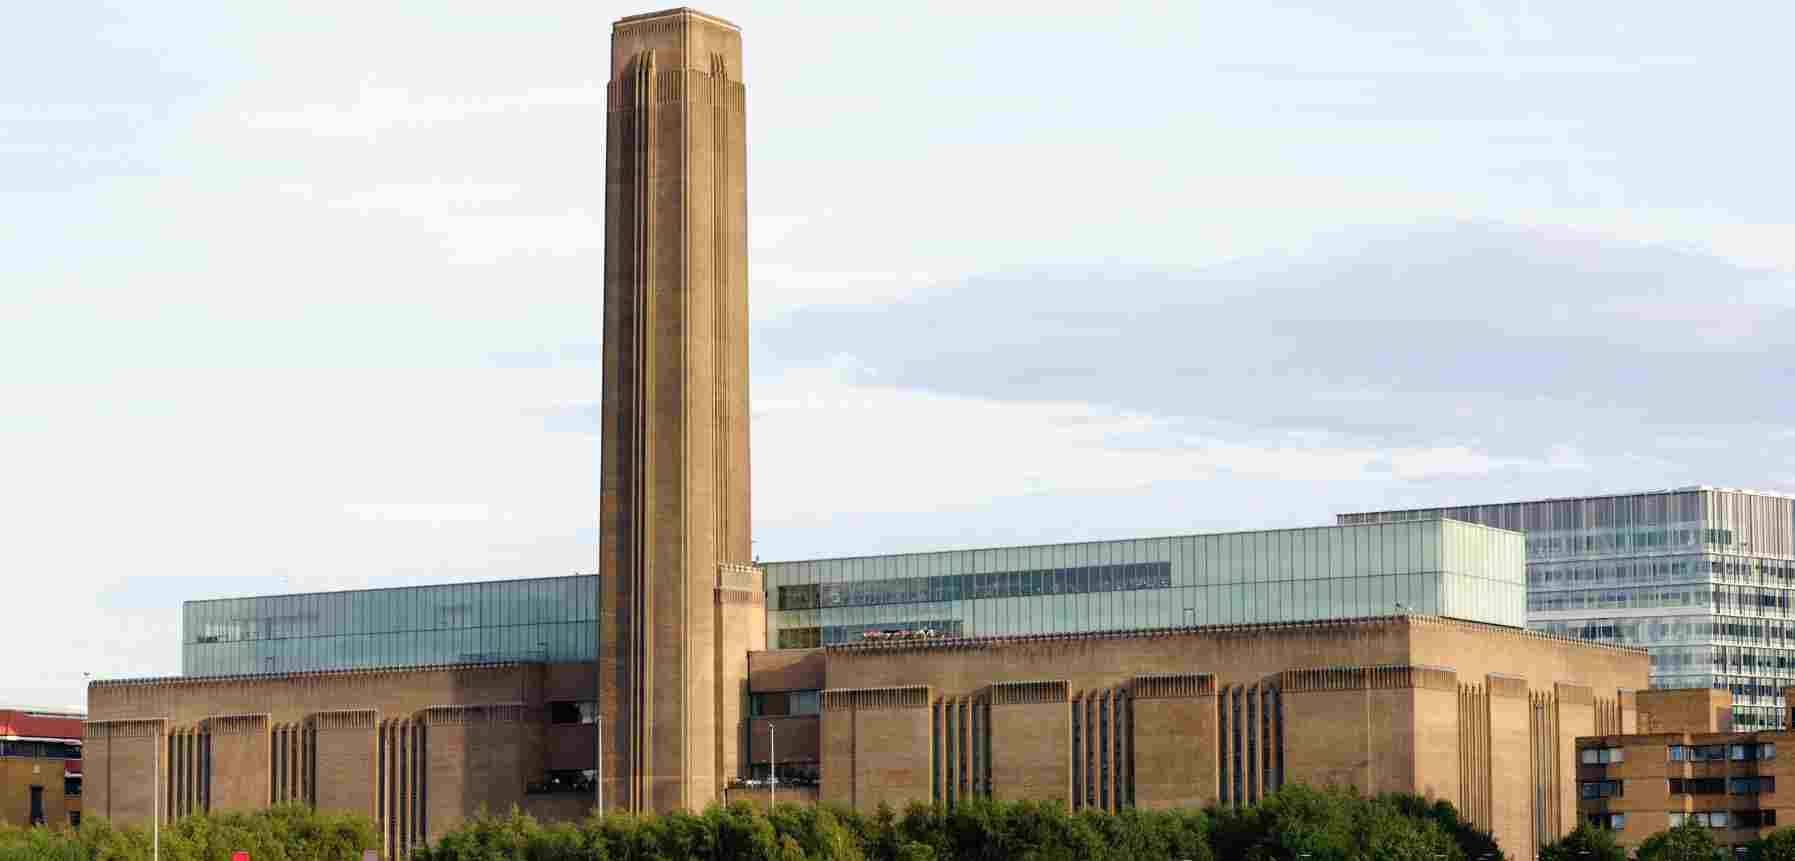 Visit the Tate Modern